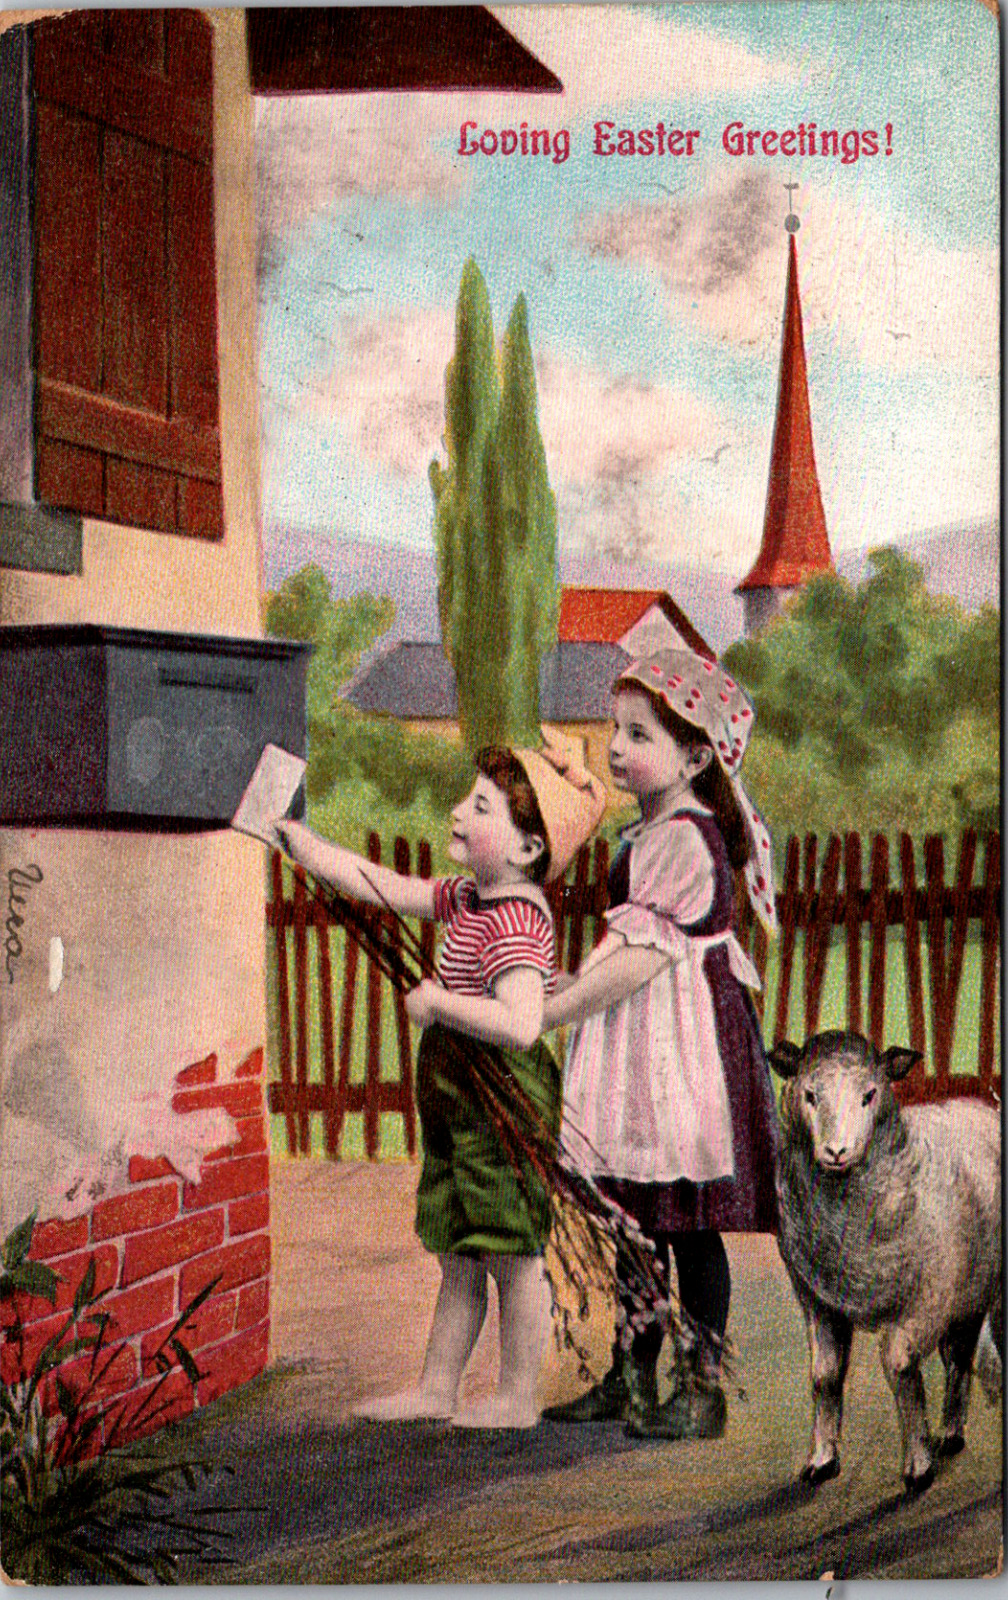 Loving Easter Greetings Little Boy & Girl w/ Lamb Mailing a Vintage Postcard